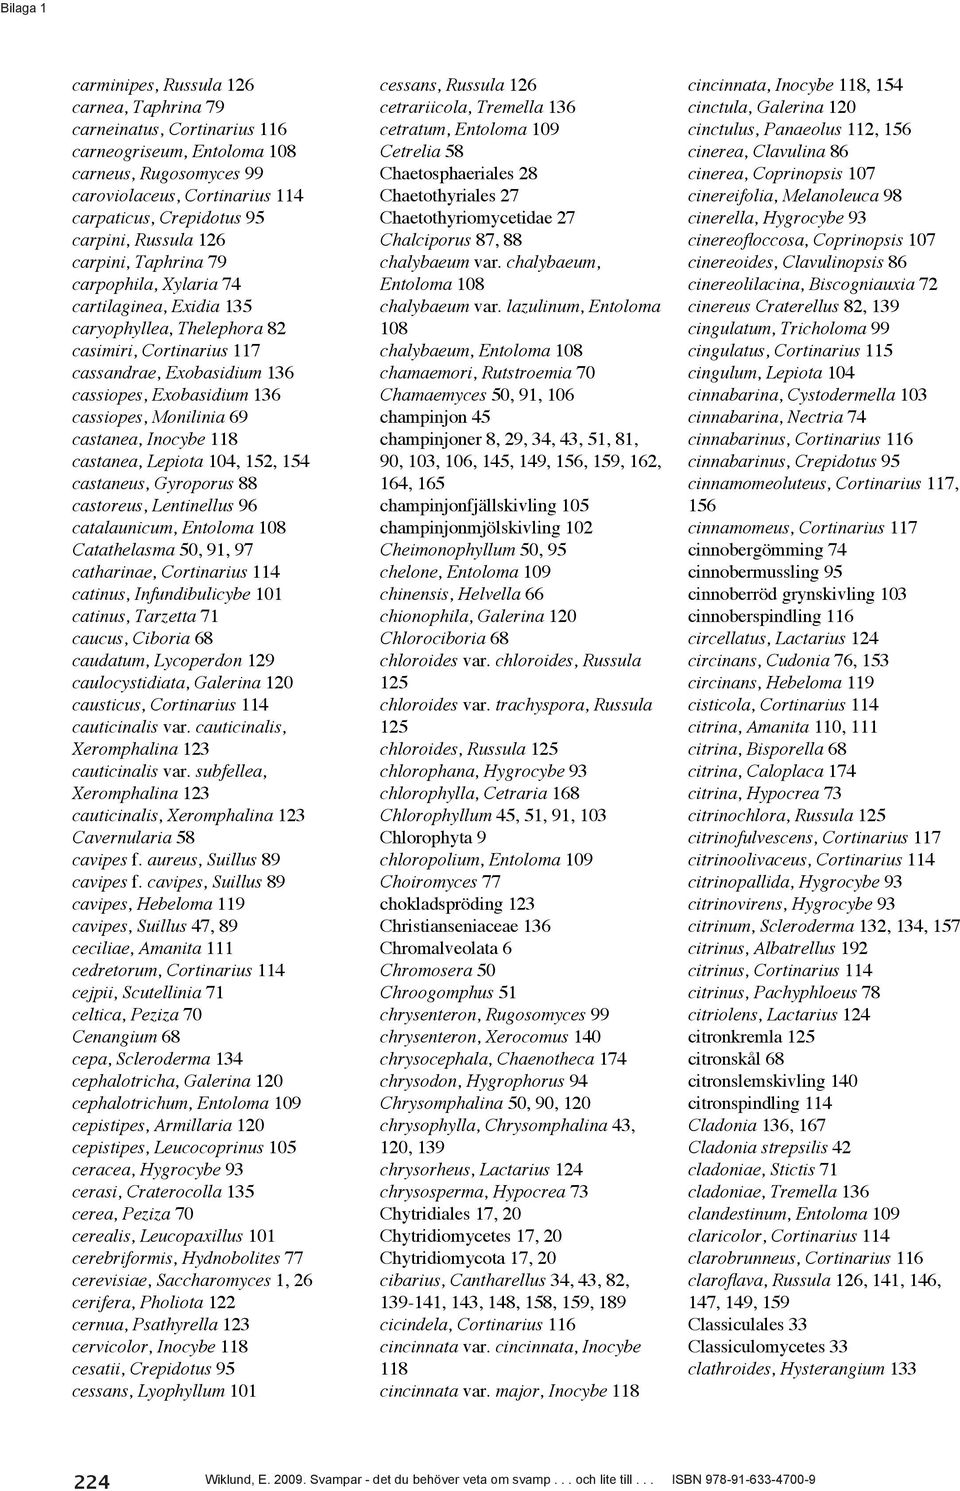 Monilinia 69 castanea, Inocybe 118 castanea, Lepiota 104, 152, 154 castaneus, Gyroporus 88 castoreus, Lentinellus 96 catalaunicum, Entoloma 108 Catathelasma 50, 91, 97 catharinae, Cortinarius 114